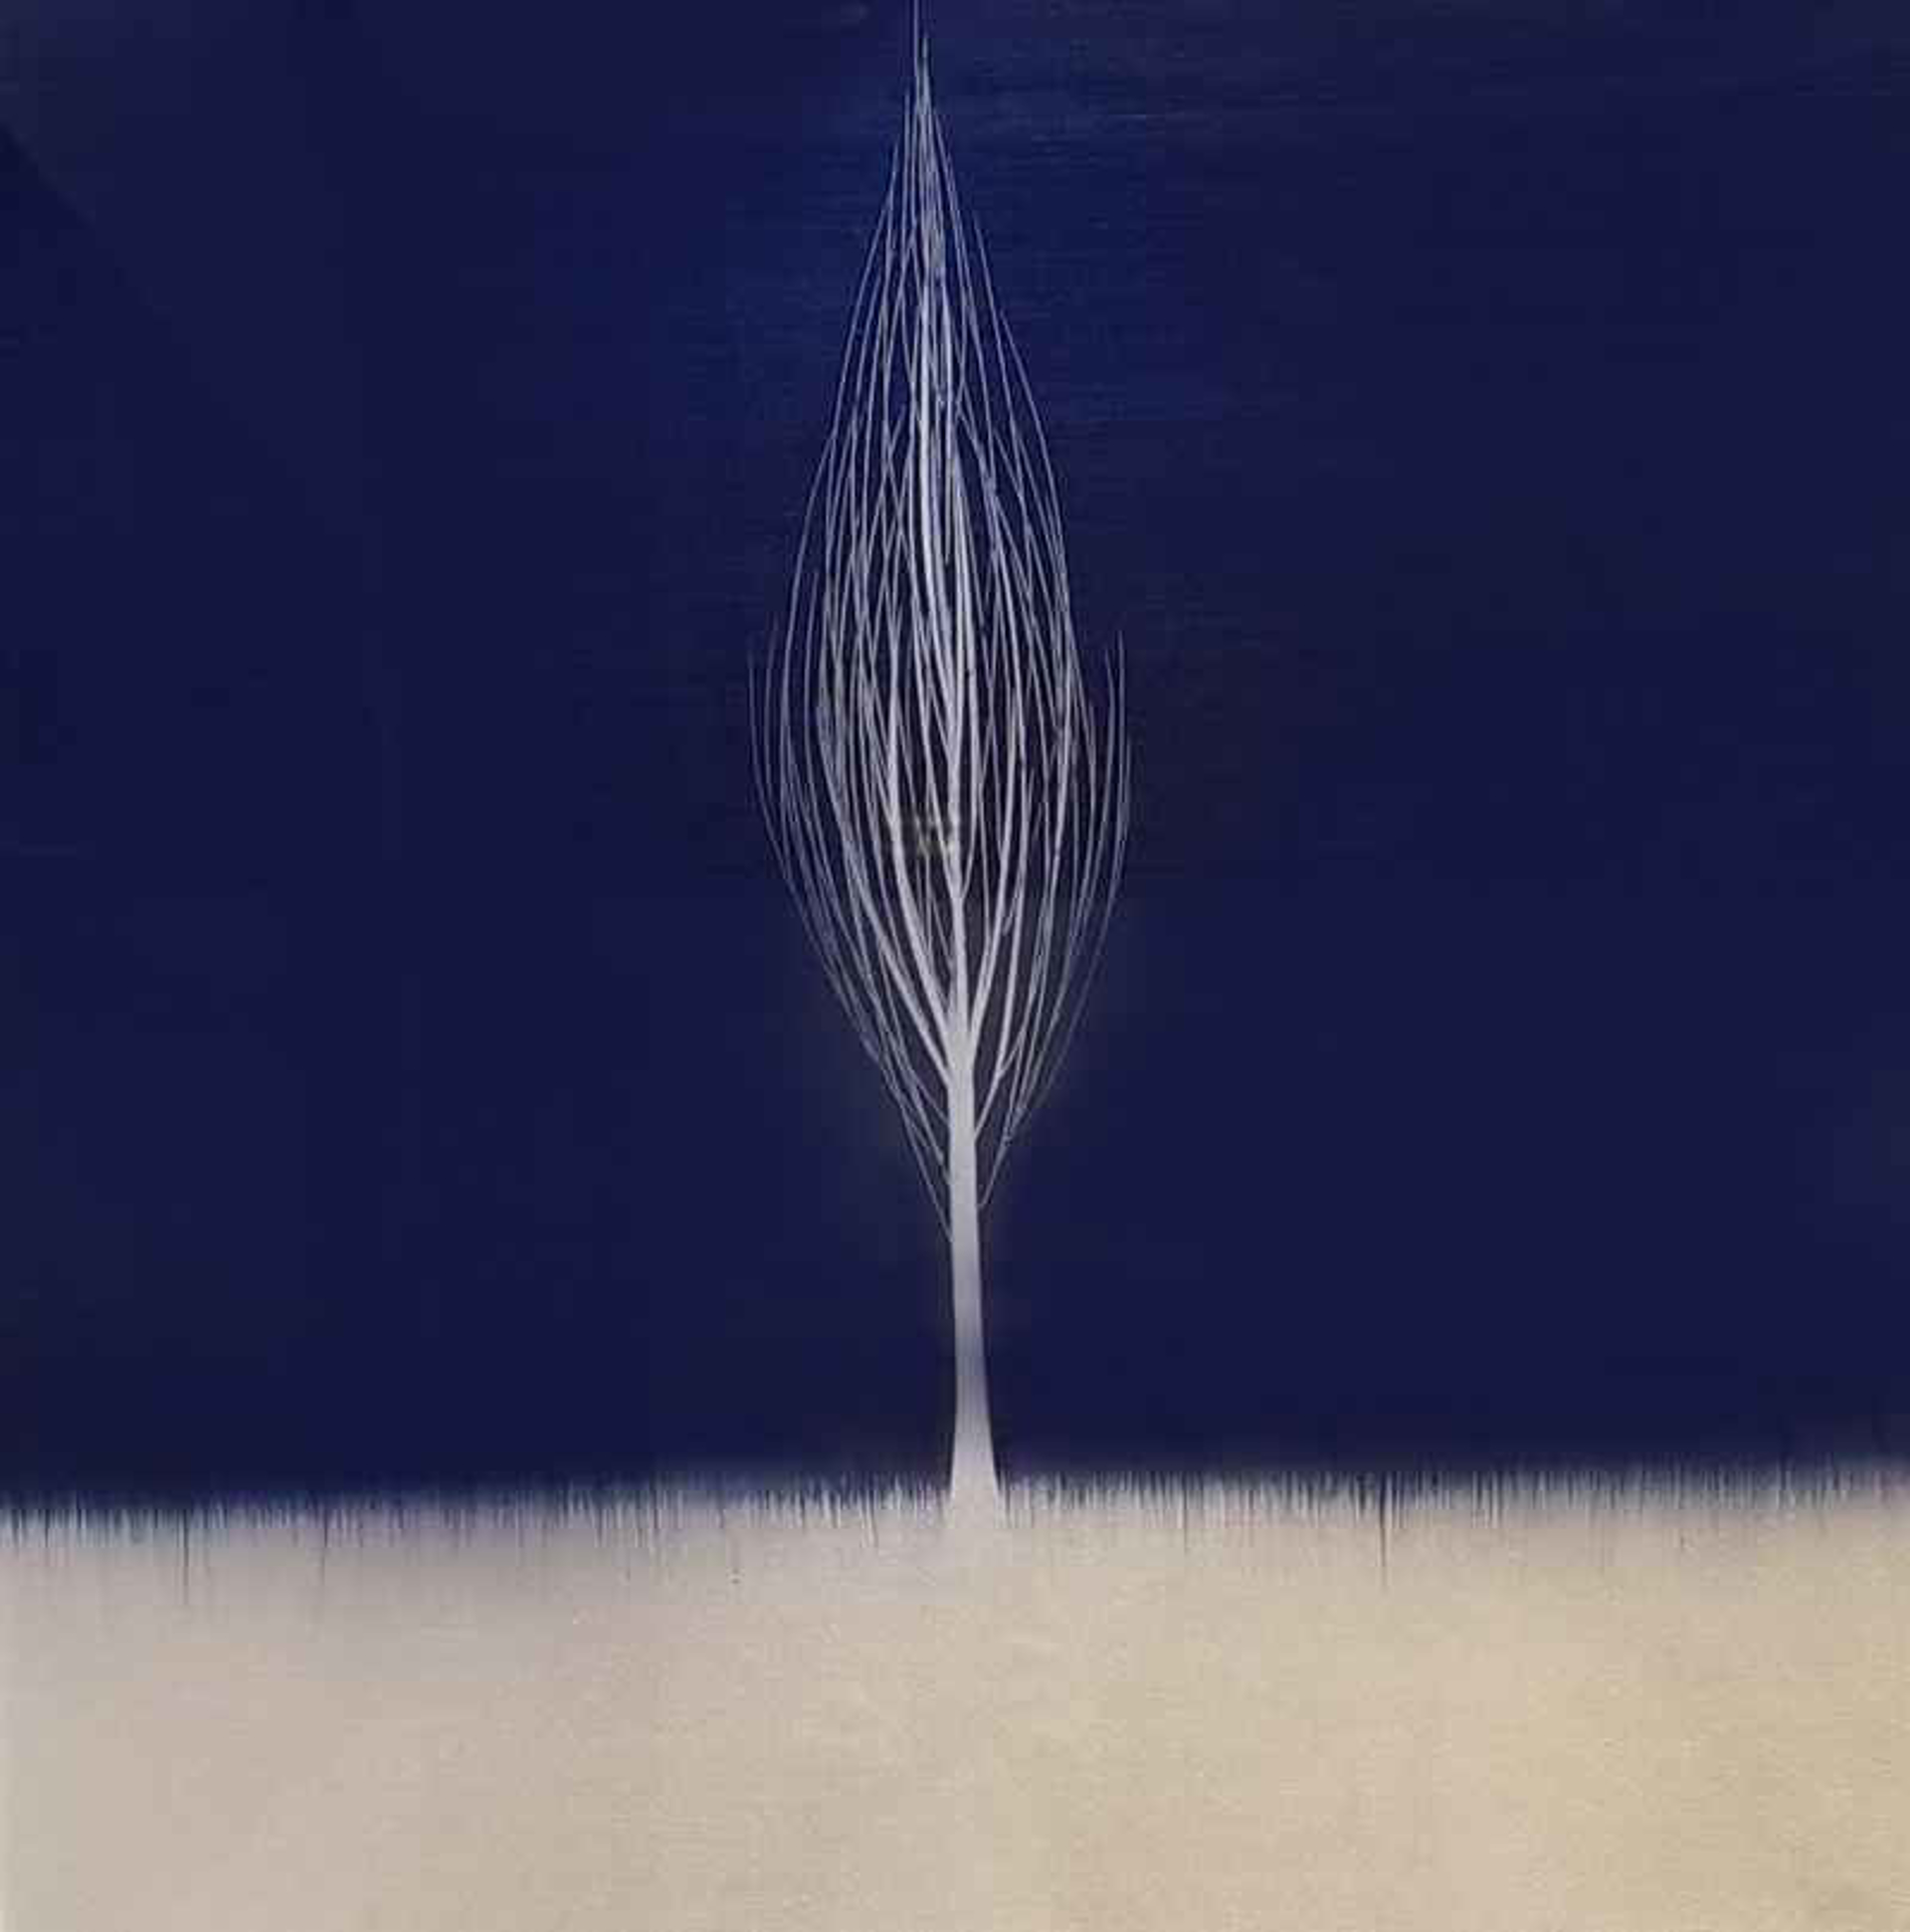 Solitude blue (18111) by Hamilton Aguiar